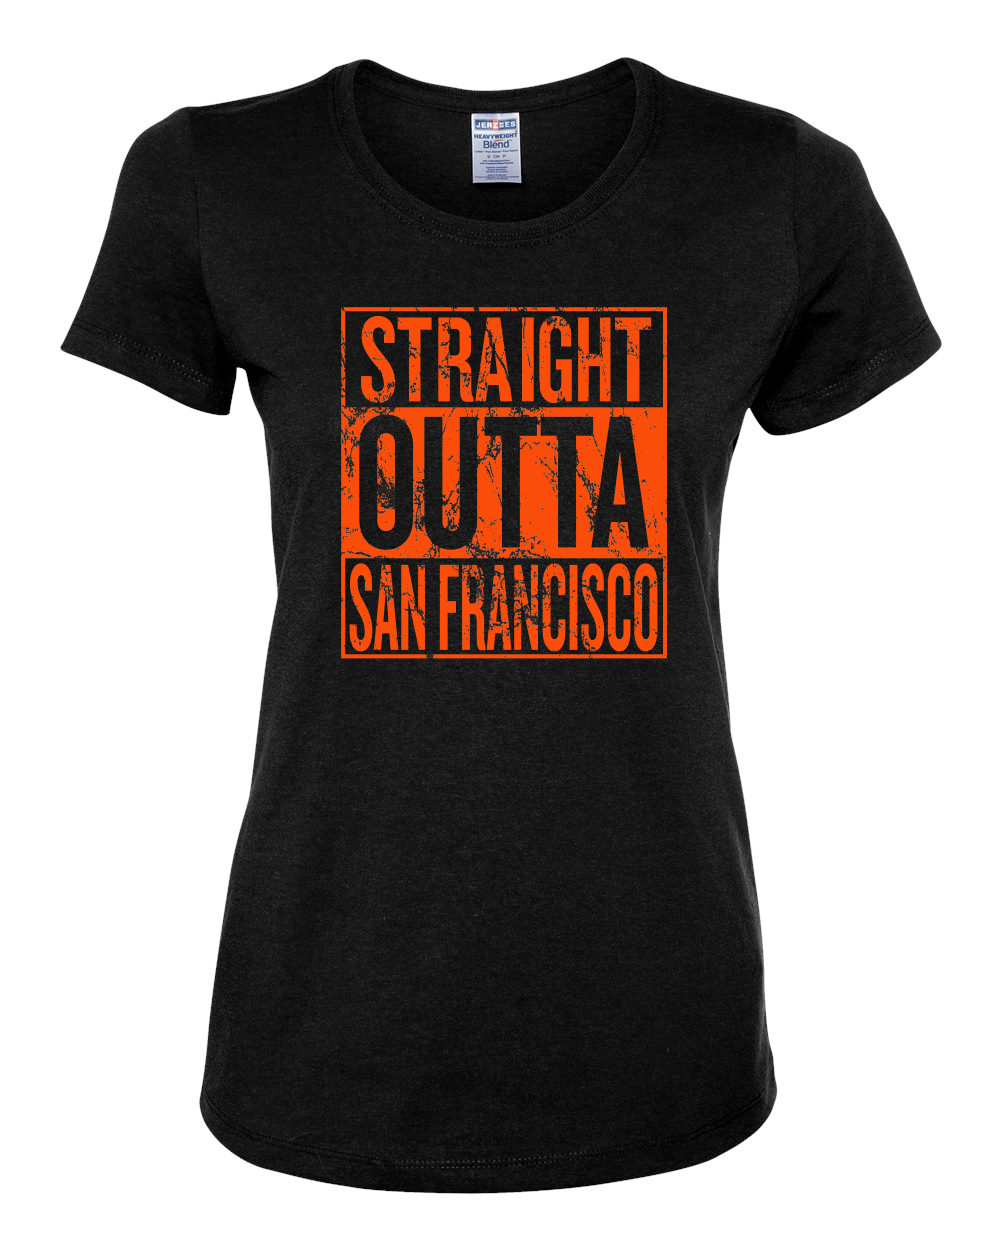 Straight Outta San Francisco SF Fan | Fantasy Baseball Fans | Womens Sports Graphic T-Shirt, Black, X-Large - image 1 of 4